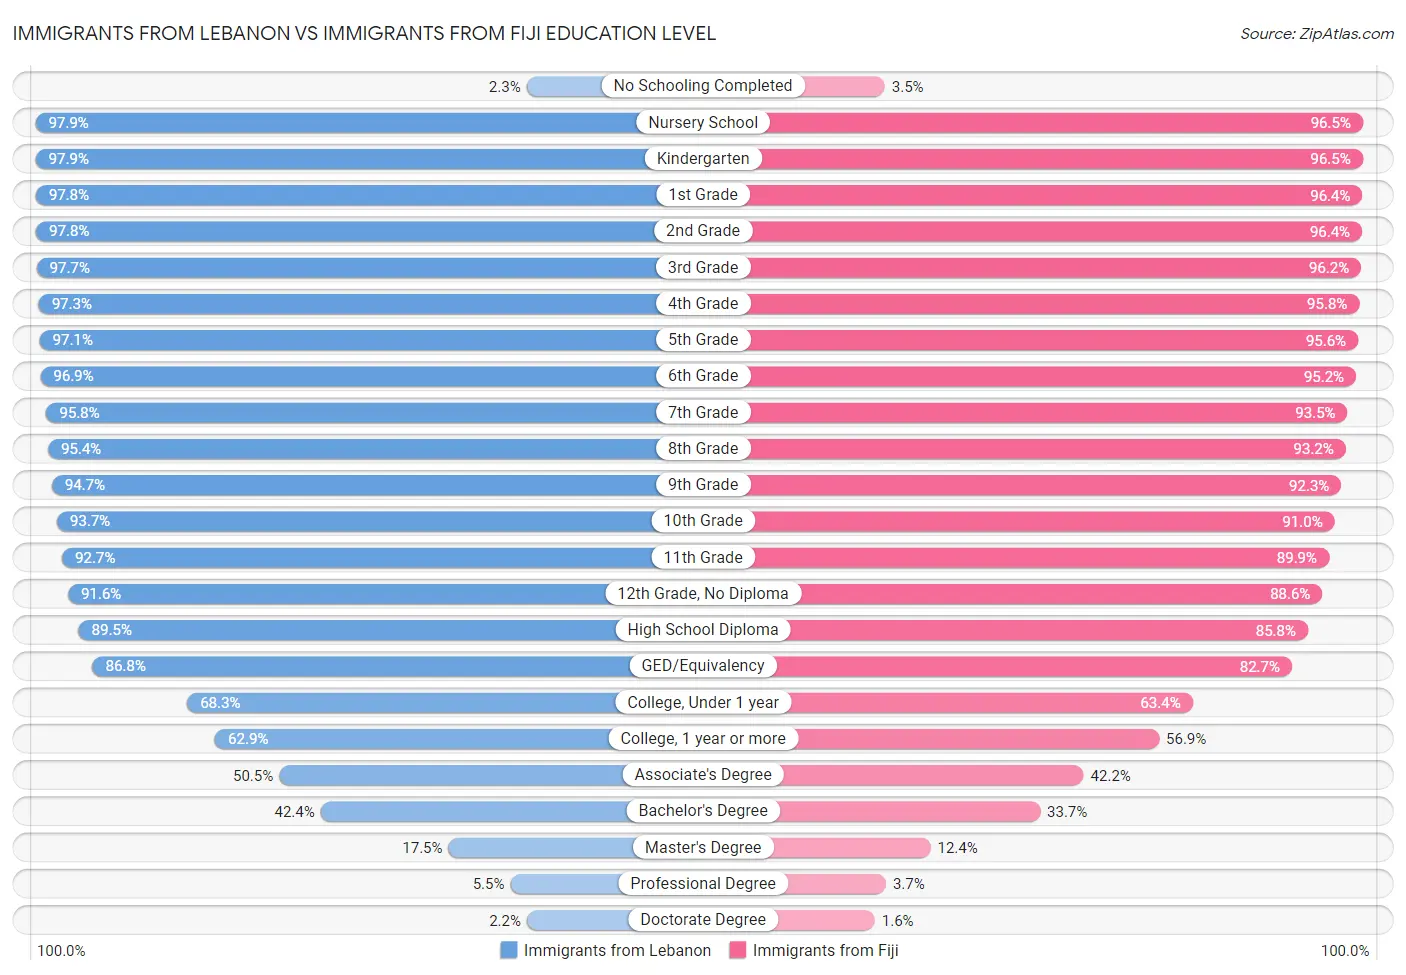 Immigrants from Lebanon vs Immigrants from Fiji Education Level